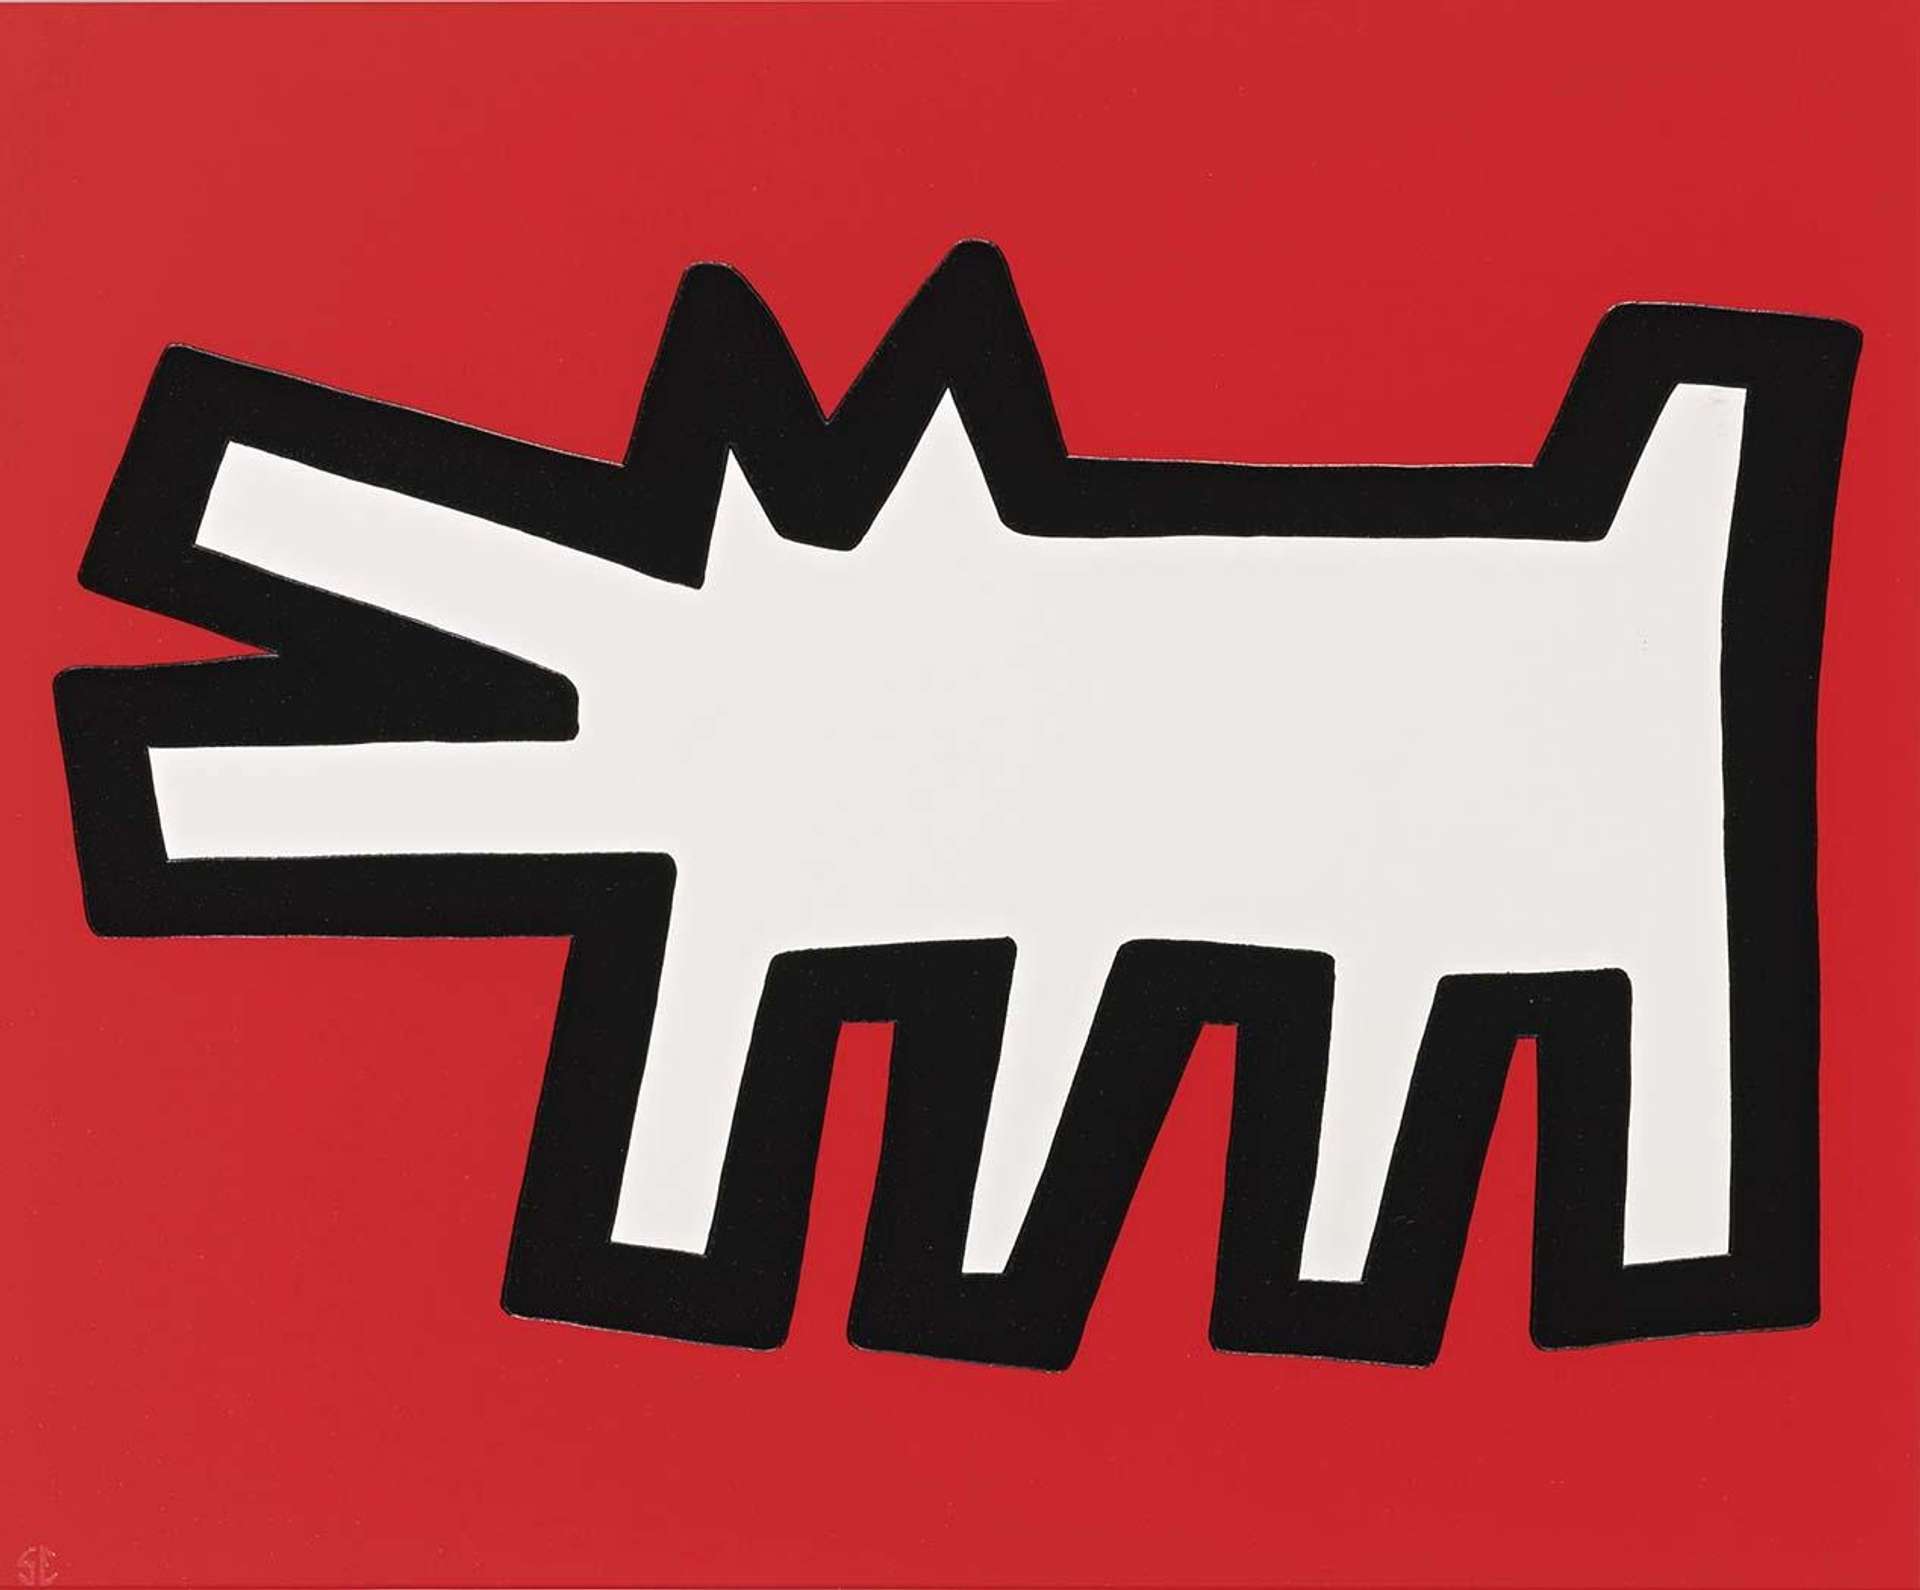 Barking Dog by Keith Haring